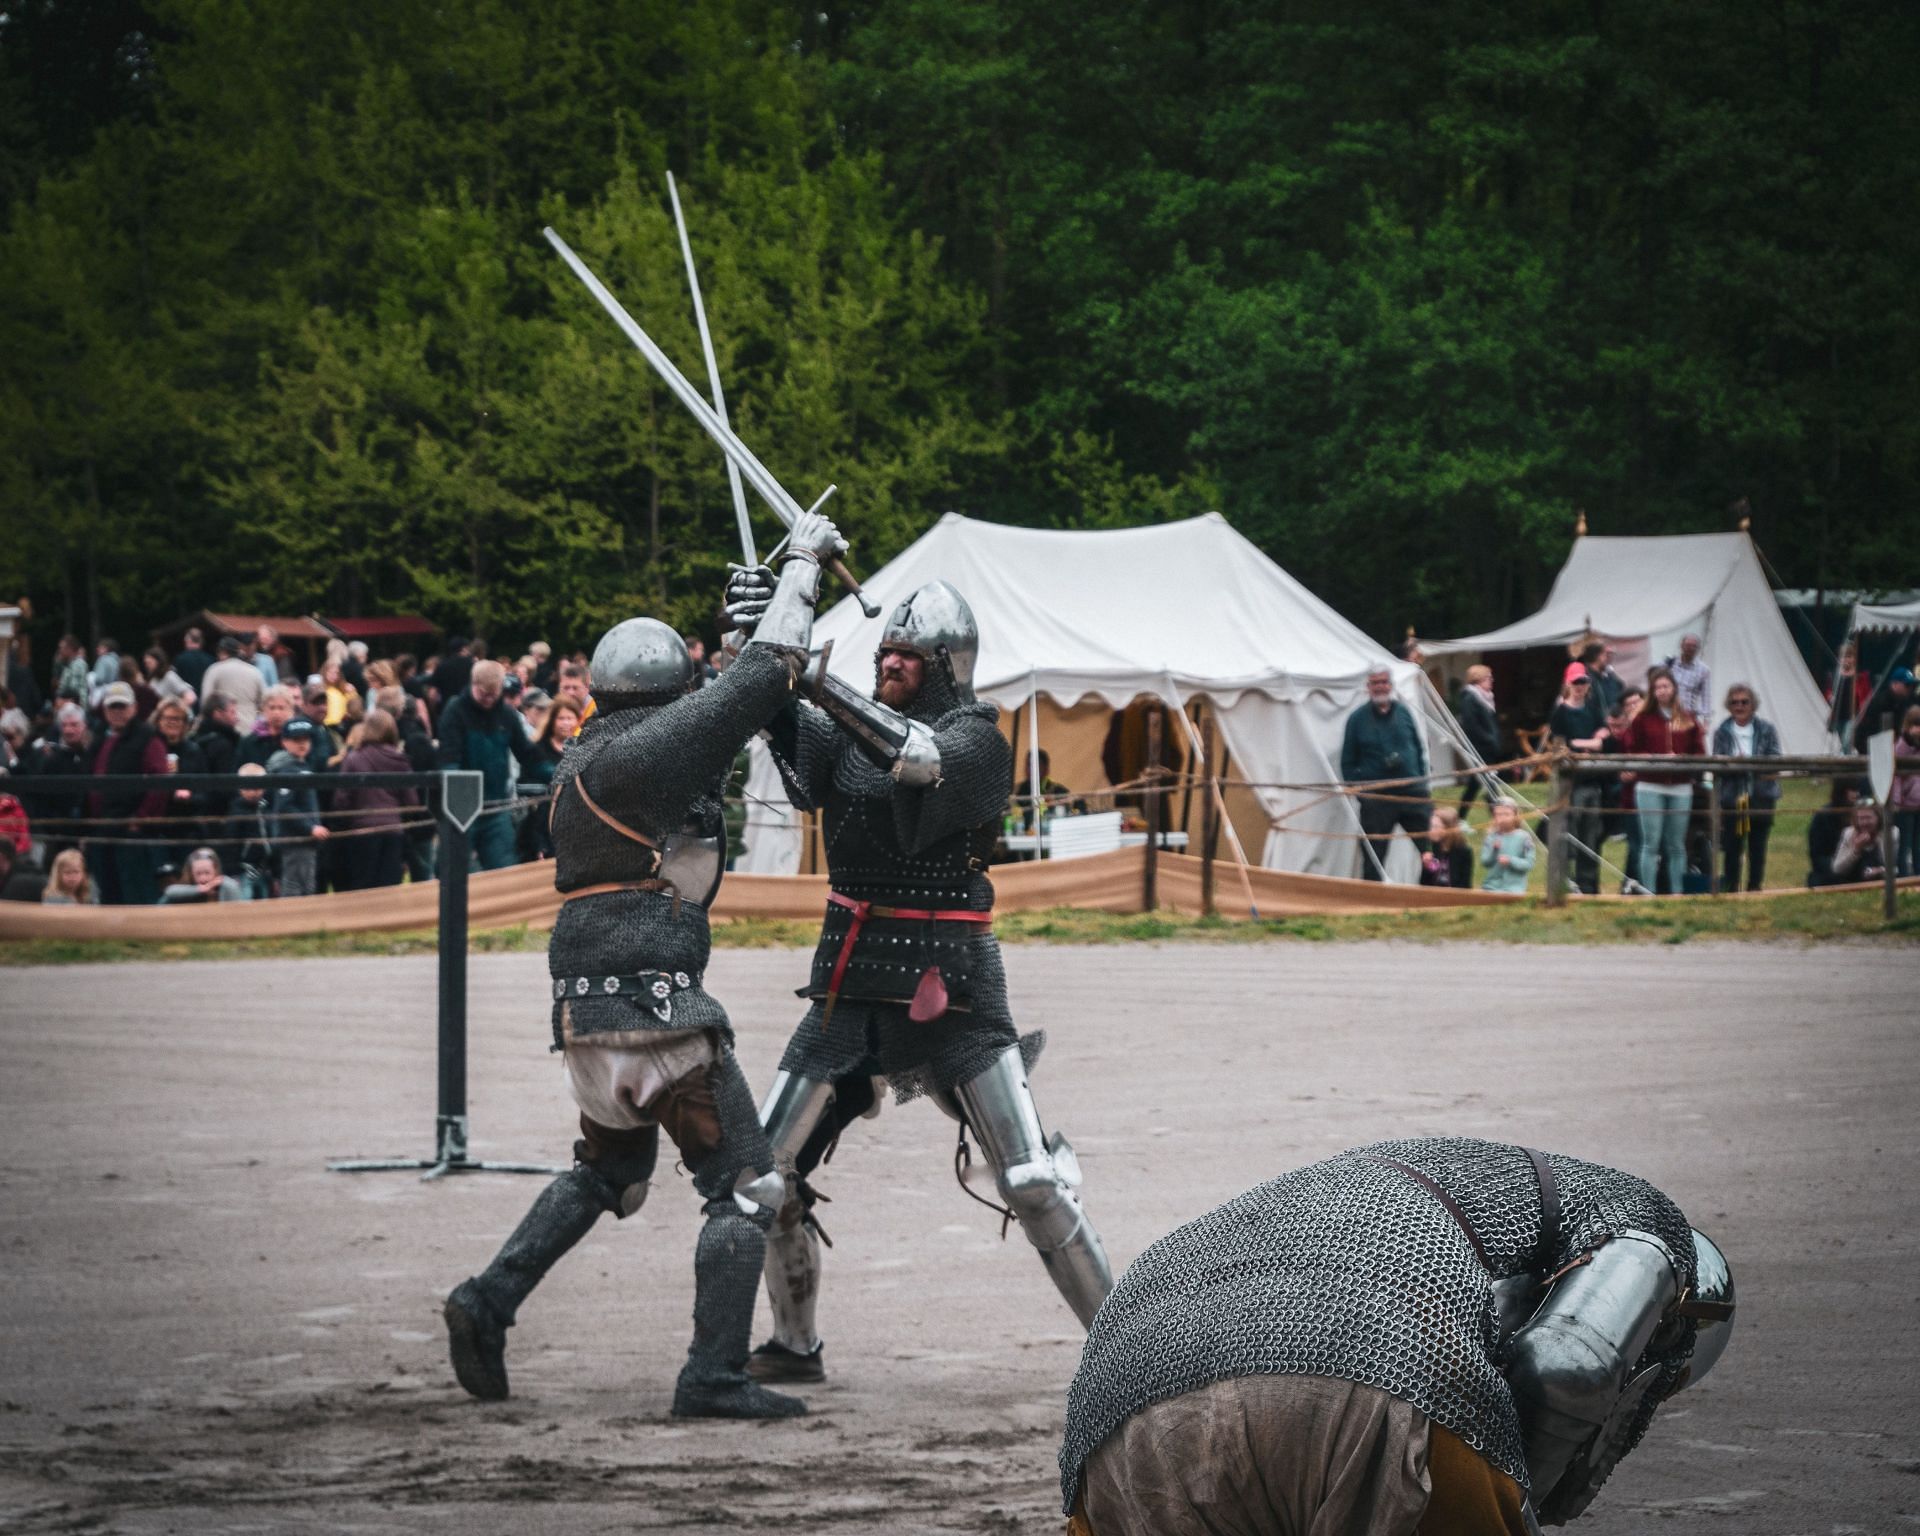 Knights combatting in a field. (Image via Unsplash/Casper Johansson)